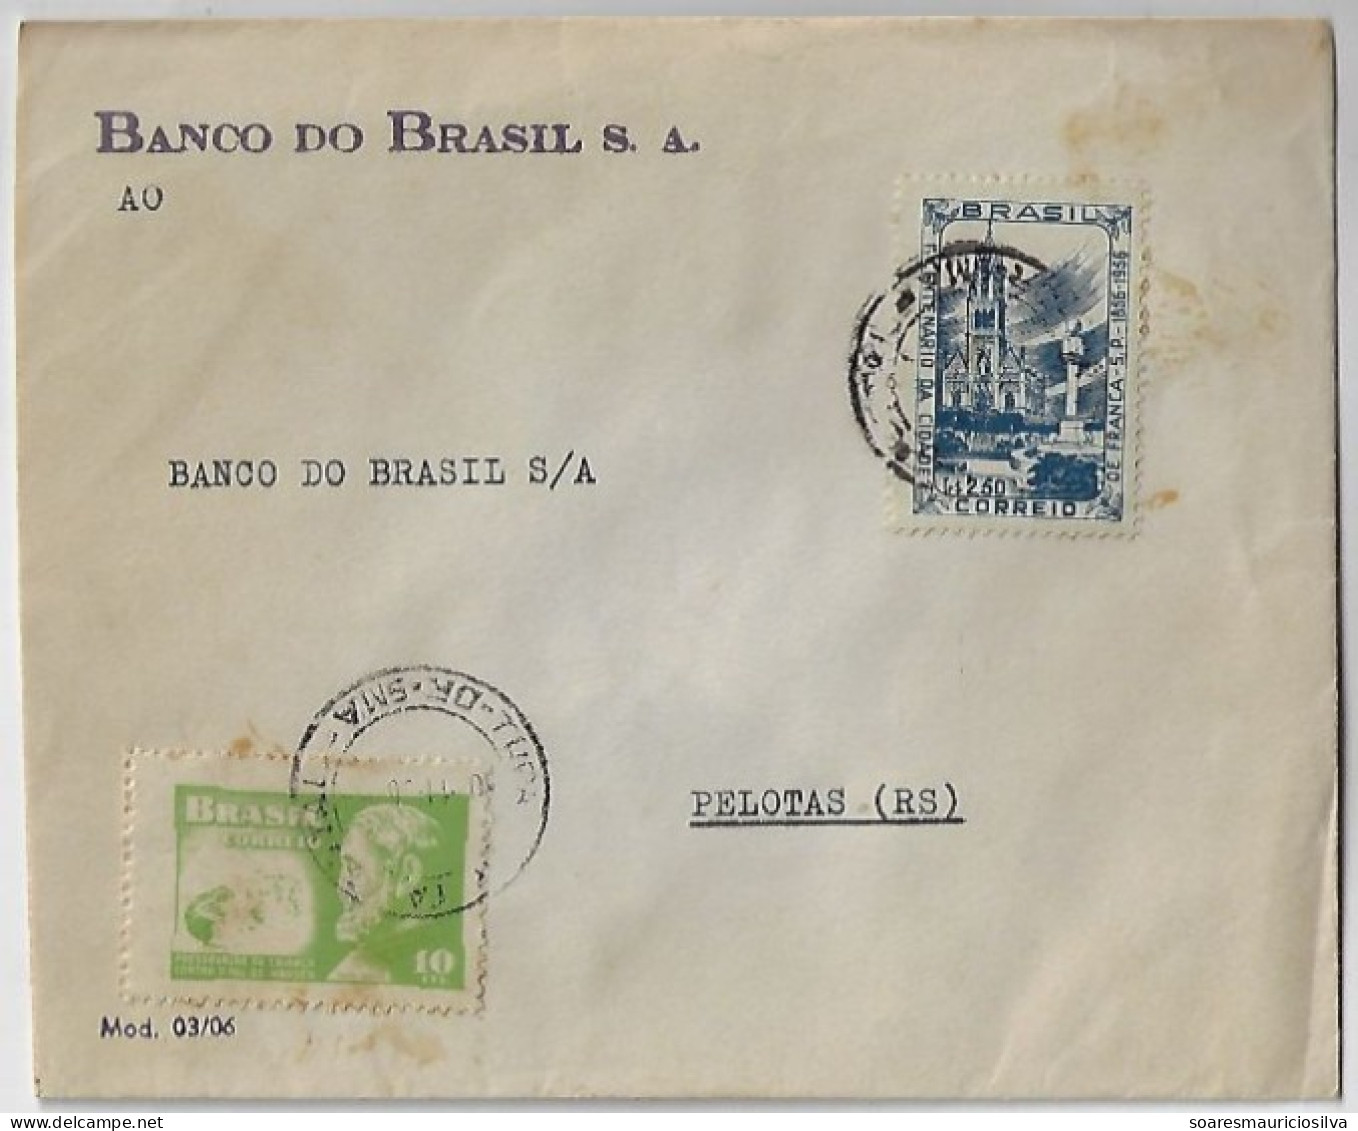 1956 Bank Of Brazil Cover Sent From Santa Maria Area To Pelotas Stamp Fanca City 1st Centenary + Hansen's Disease - Storia Postale